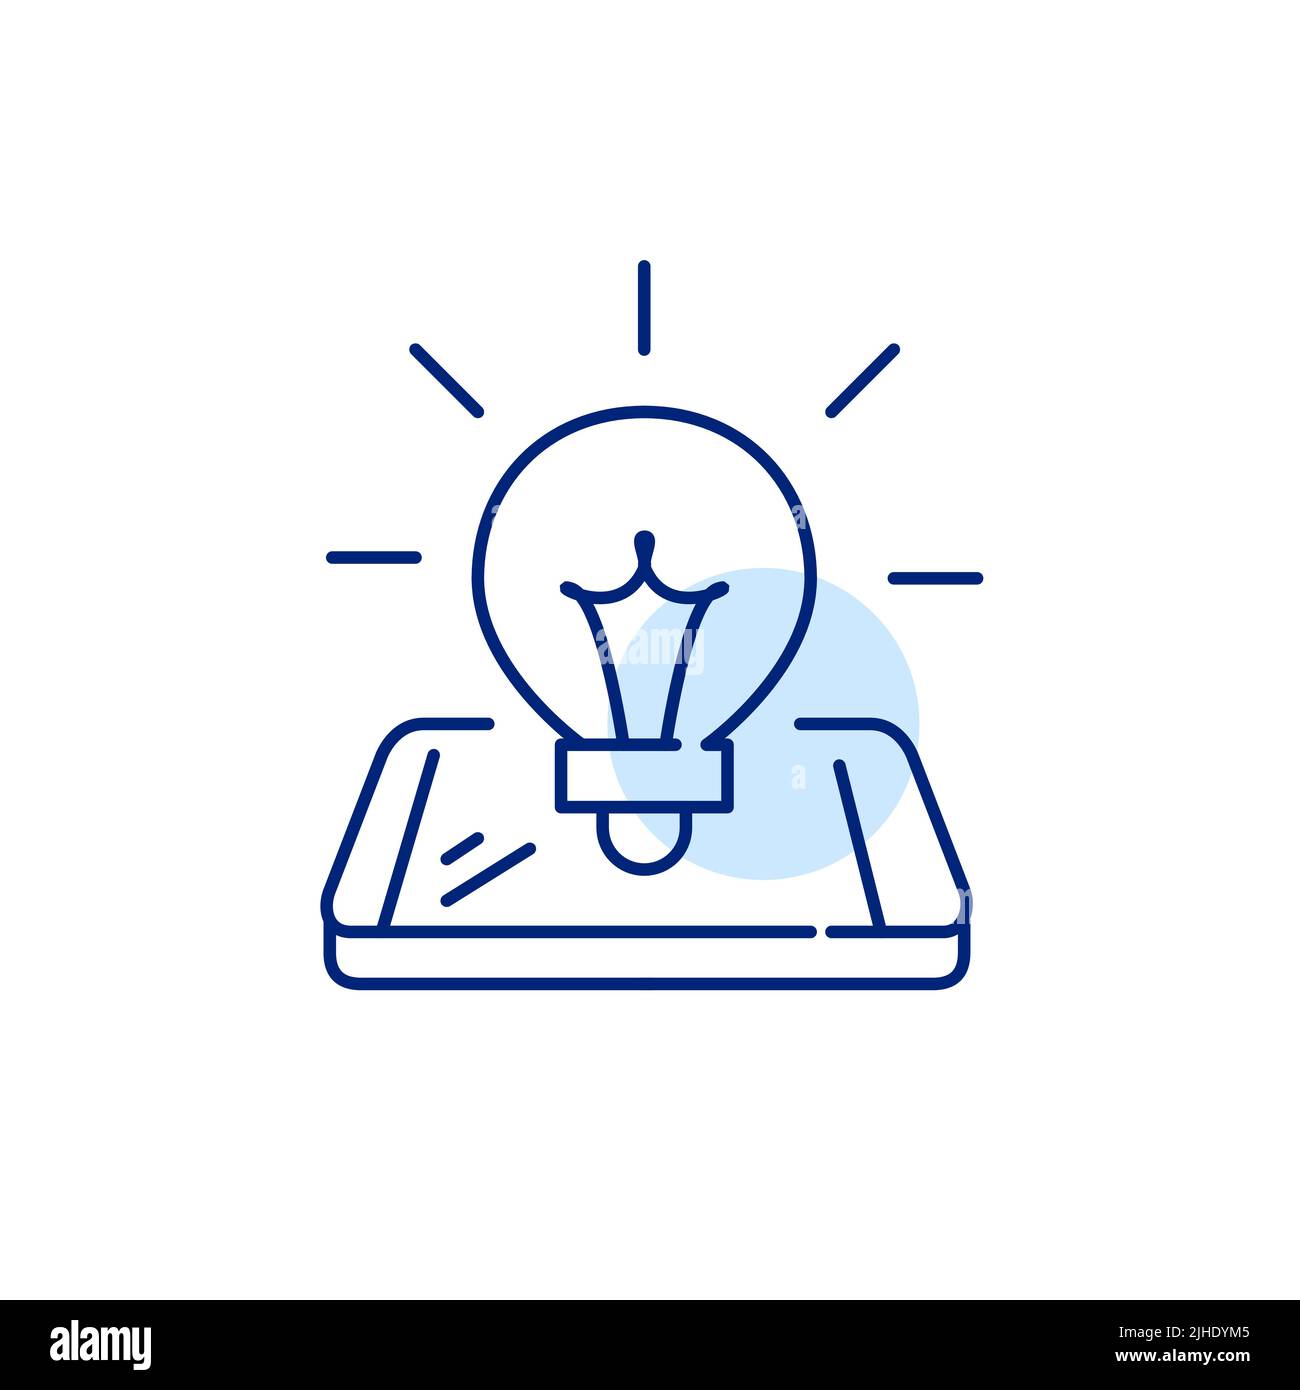 Light bulb on a smartphone. Having a creative idea or getting advice. Pixel perfect, editable stroke line art icon Stock Vector